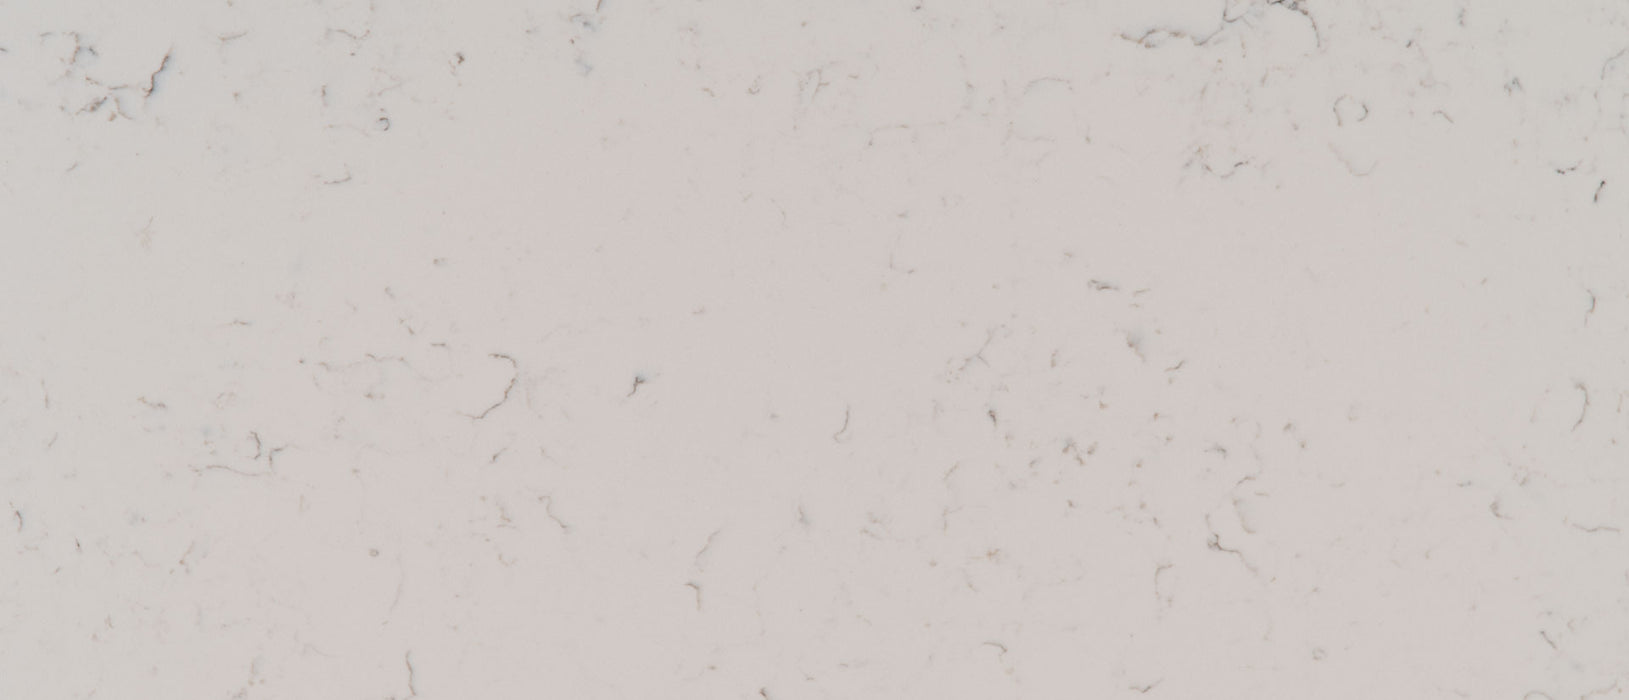 Carrara Grigio quartz countertop close up